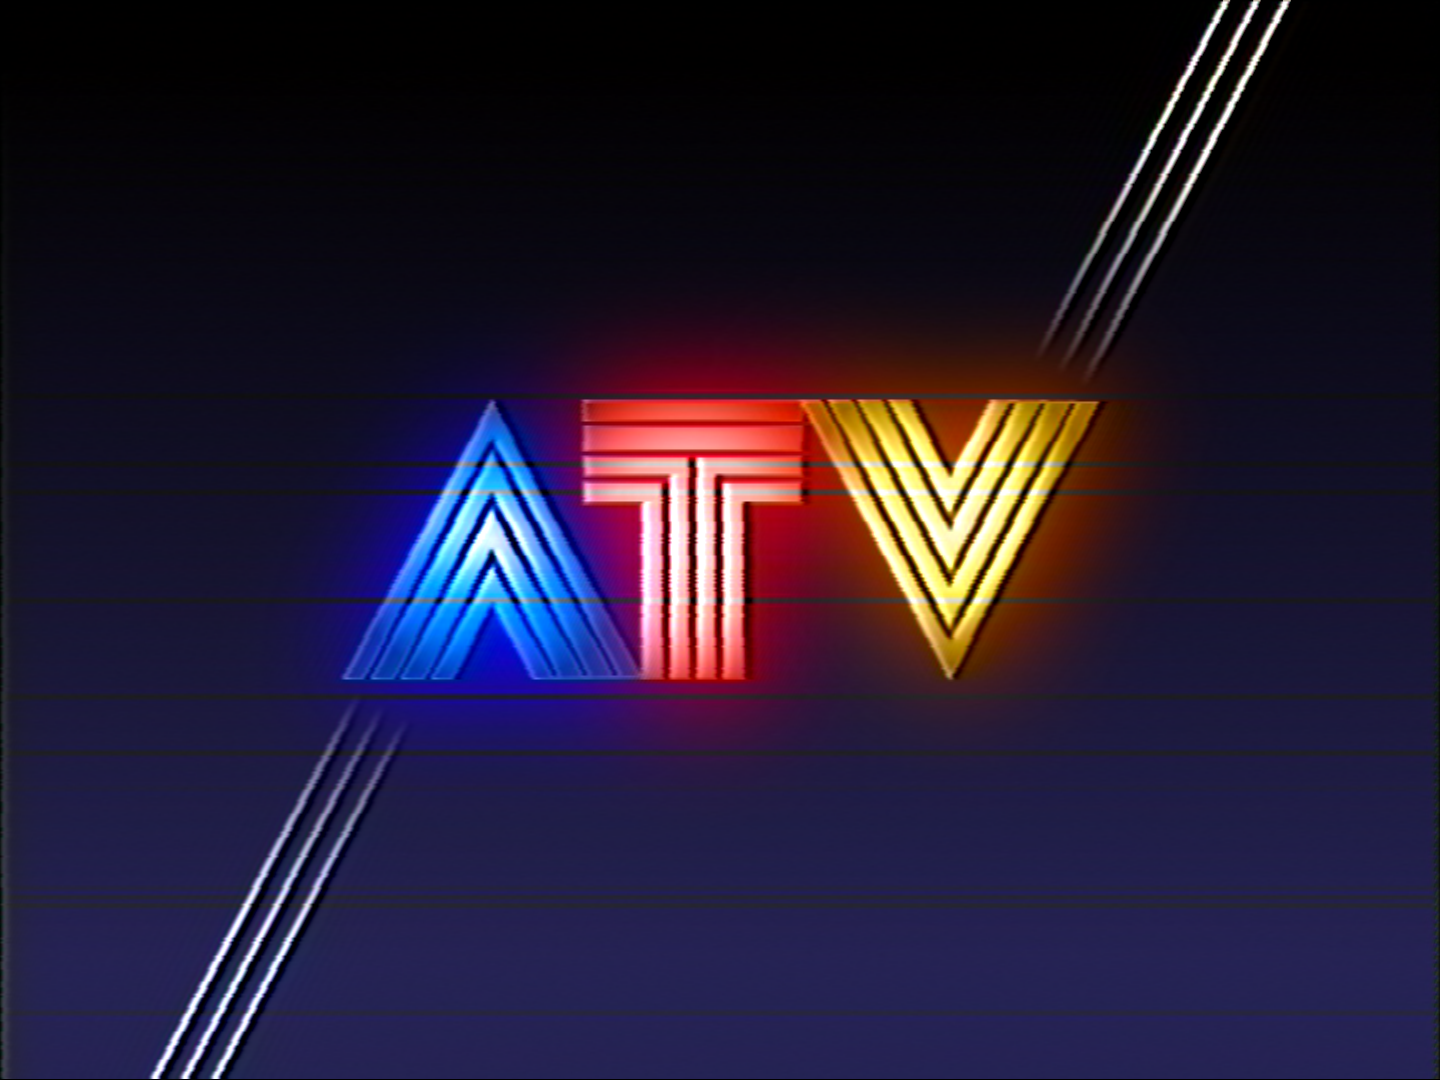 ATV Midlands (1984)